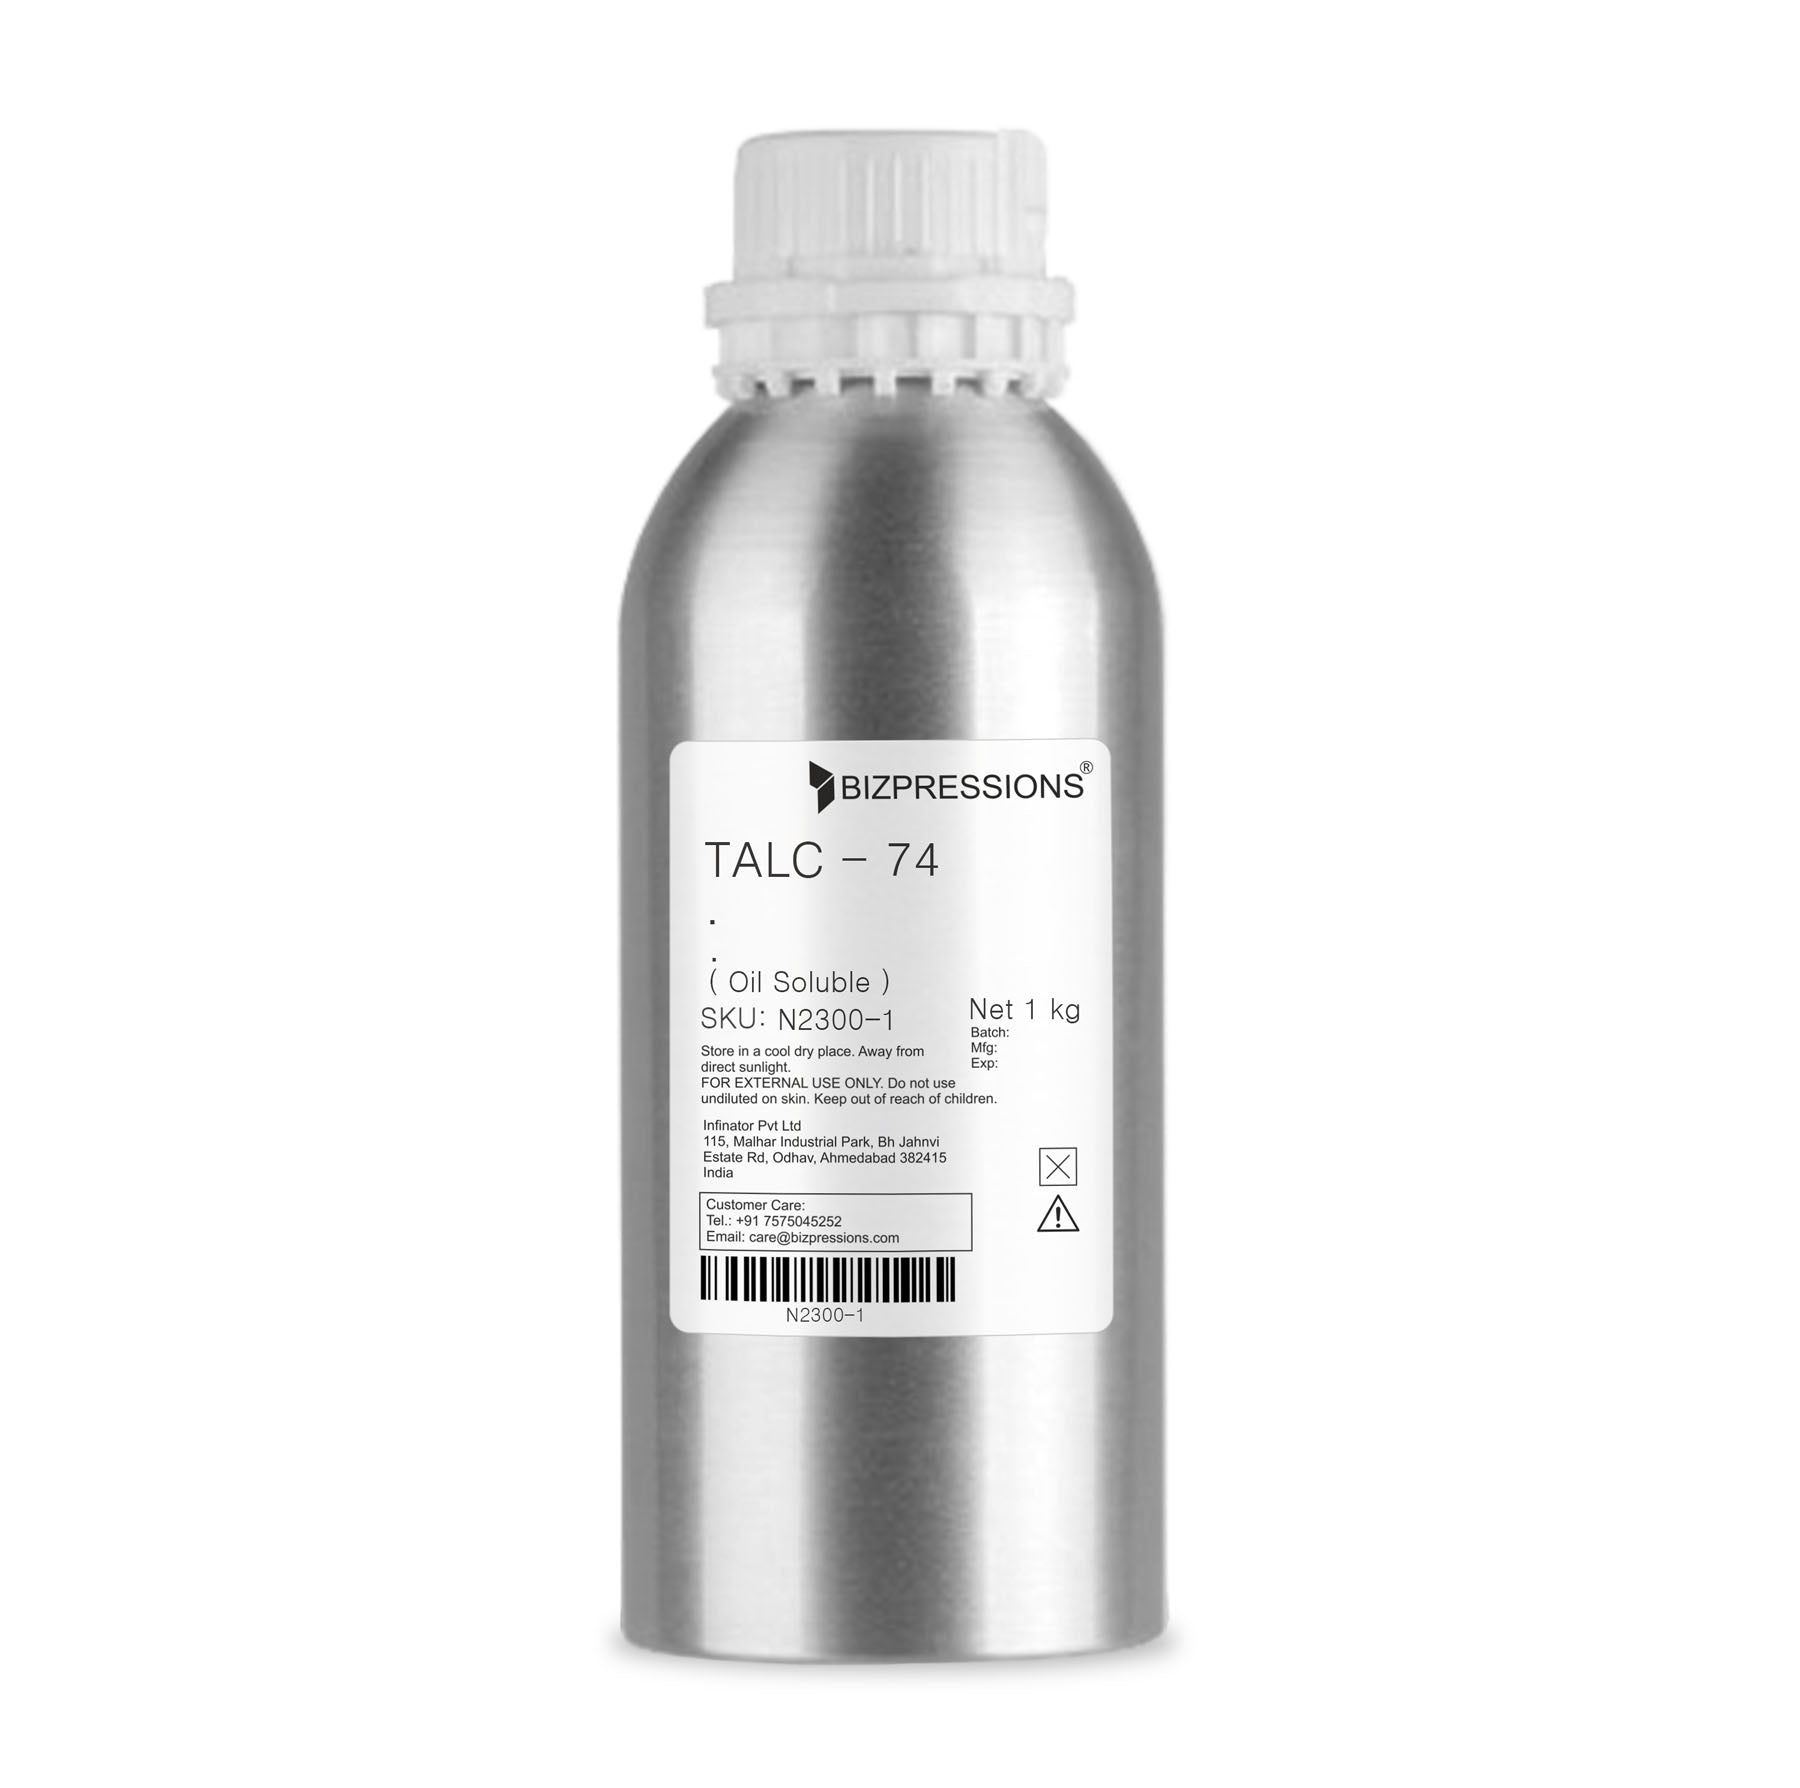 TALC - 74 - Fragrance ( Oil Soluble ) - 1 kg